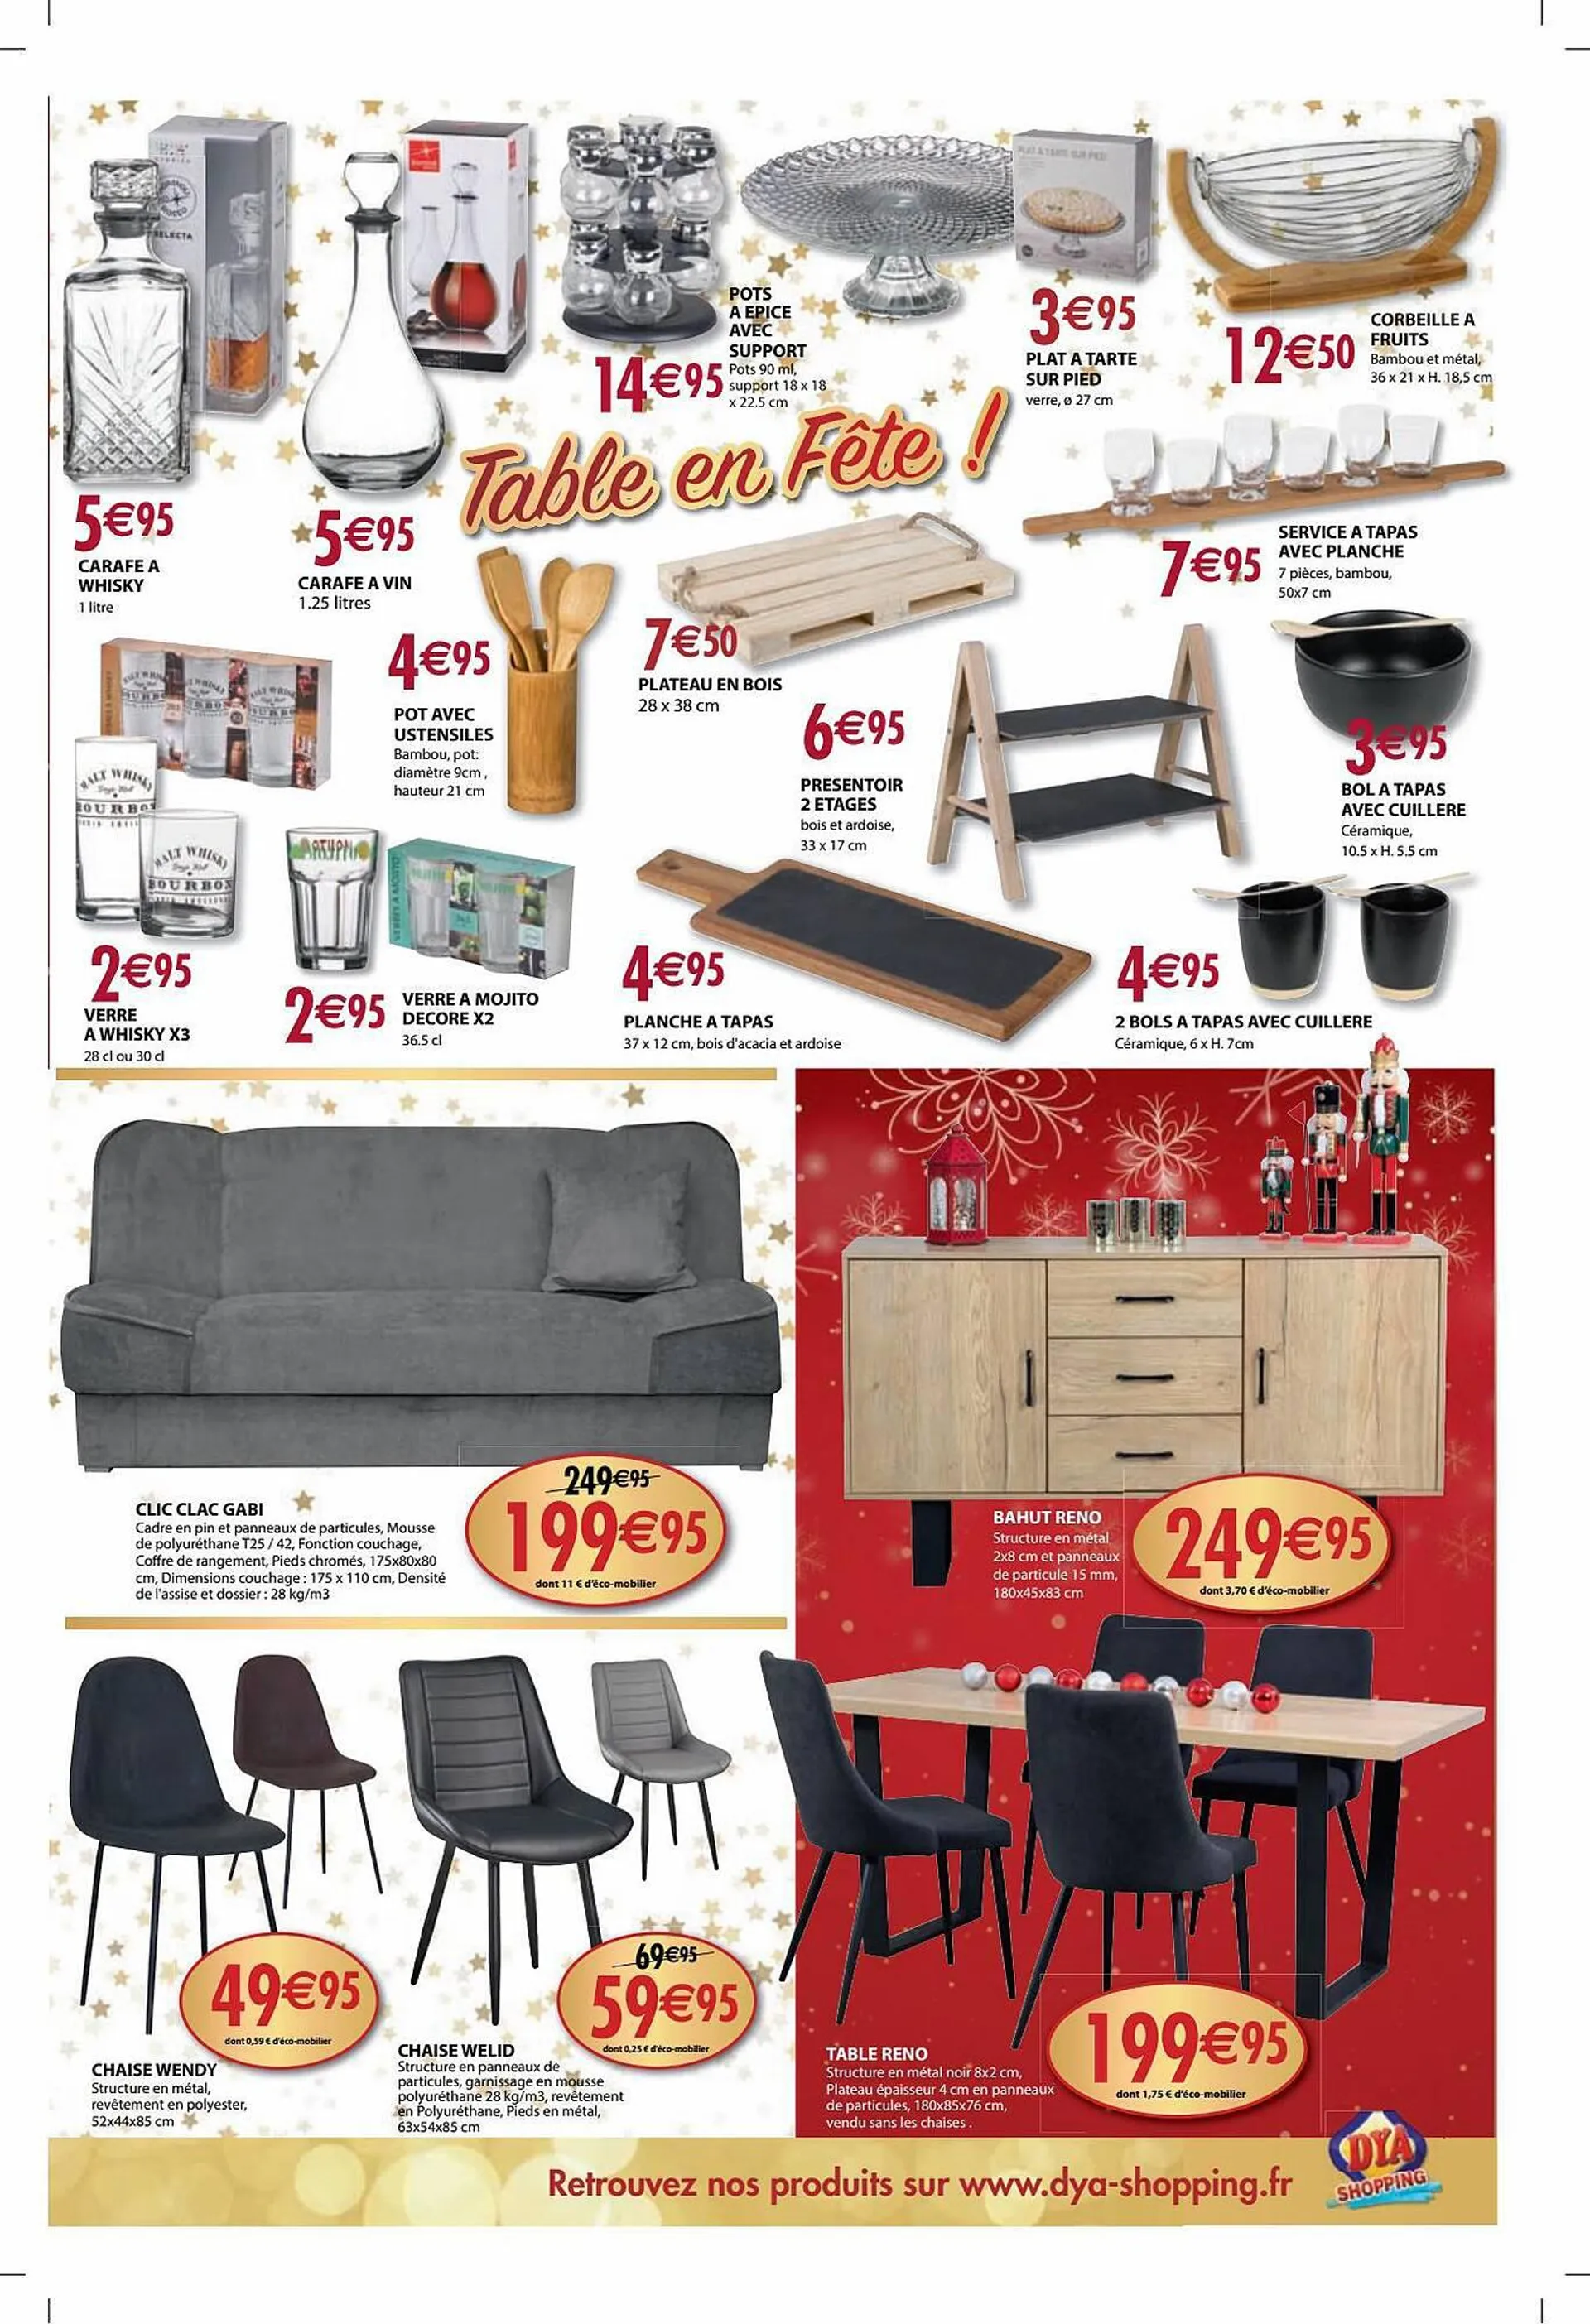 Catalogue DYA Shopping - 3